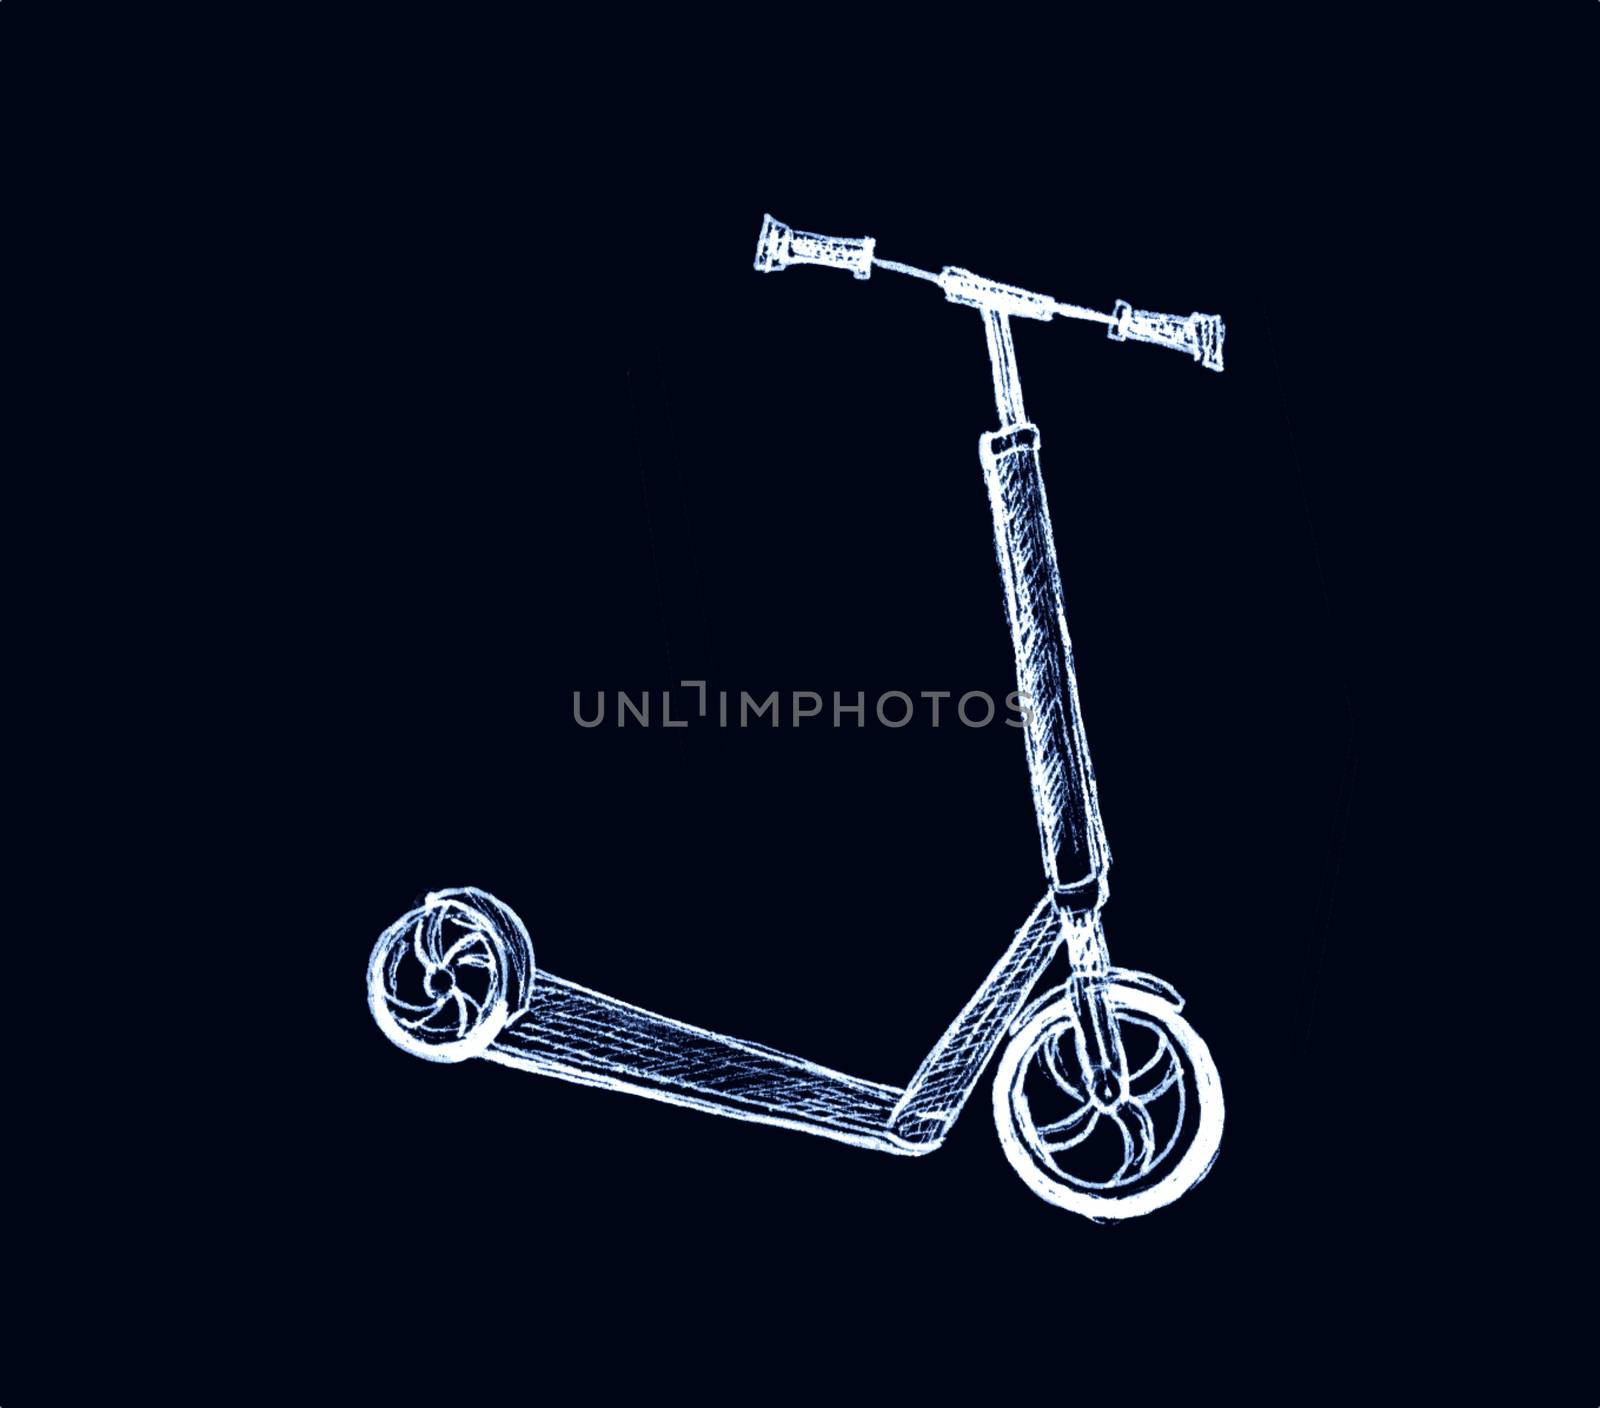 Scooter sketch isolated on dark background. Eco alternative transport concept. Han-drawn illustration by sshisshka